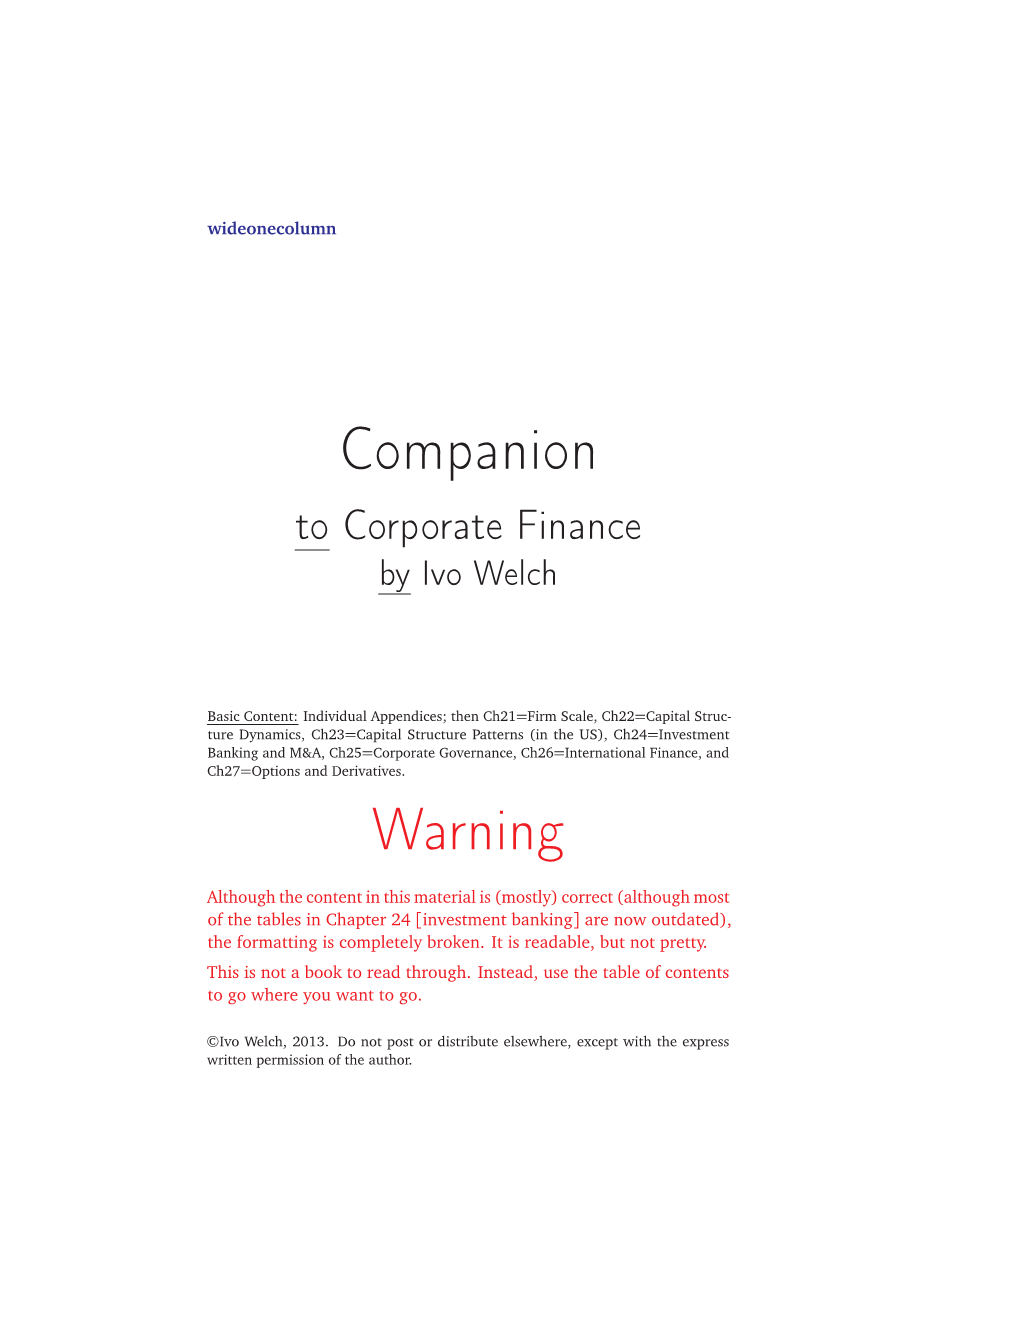 Companion Warning